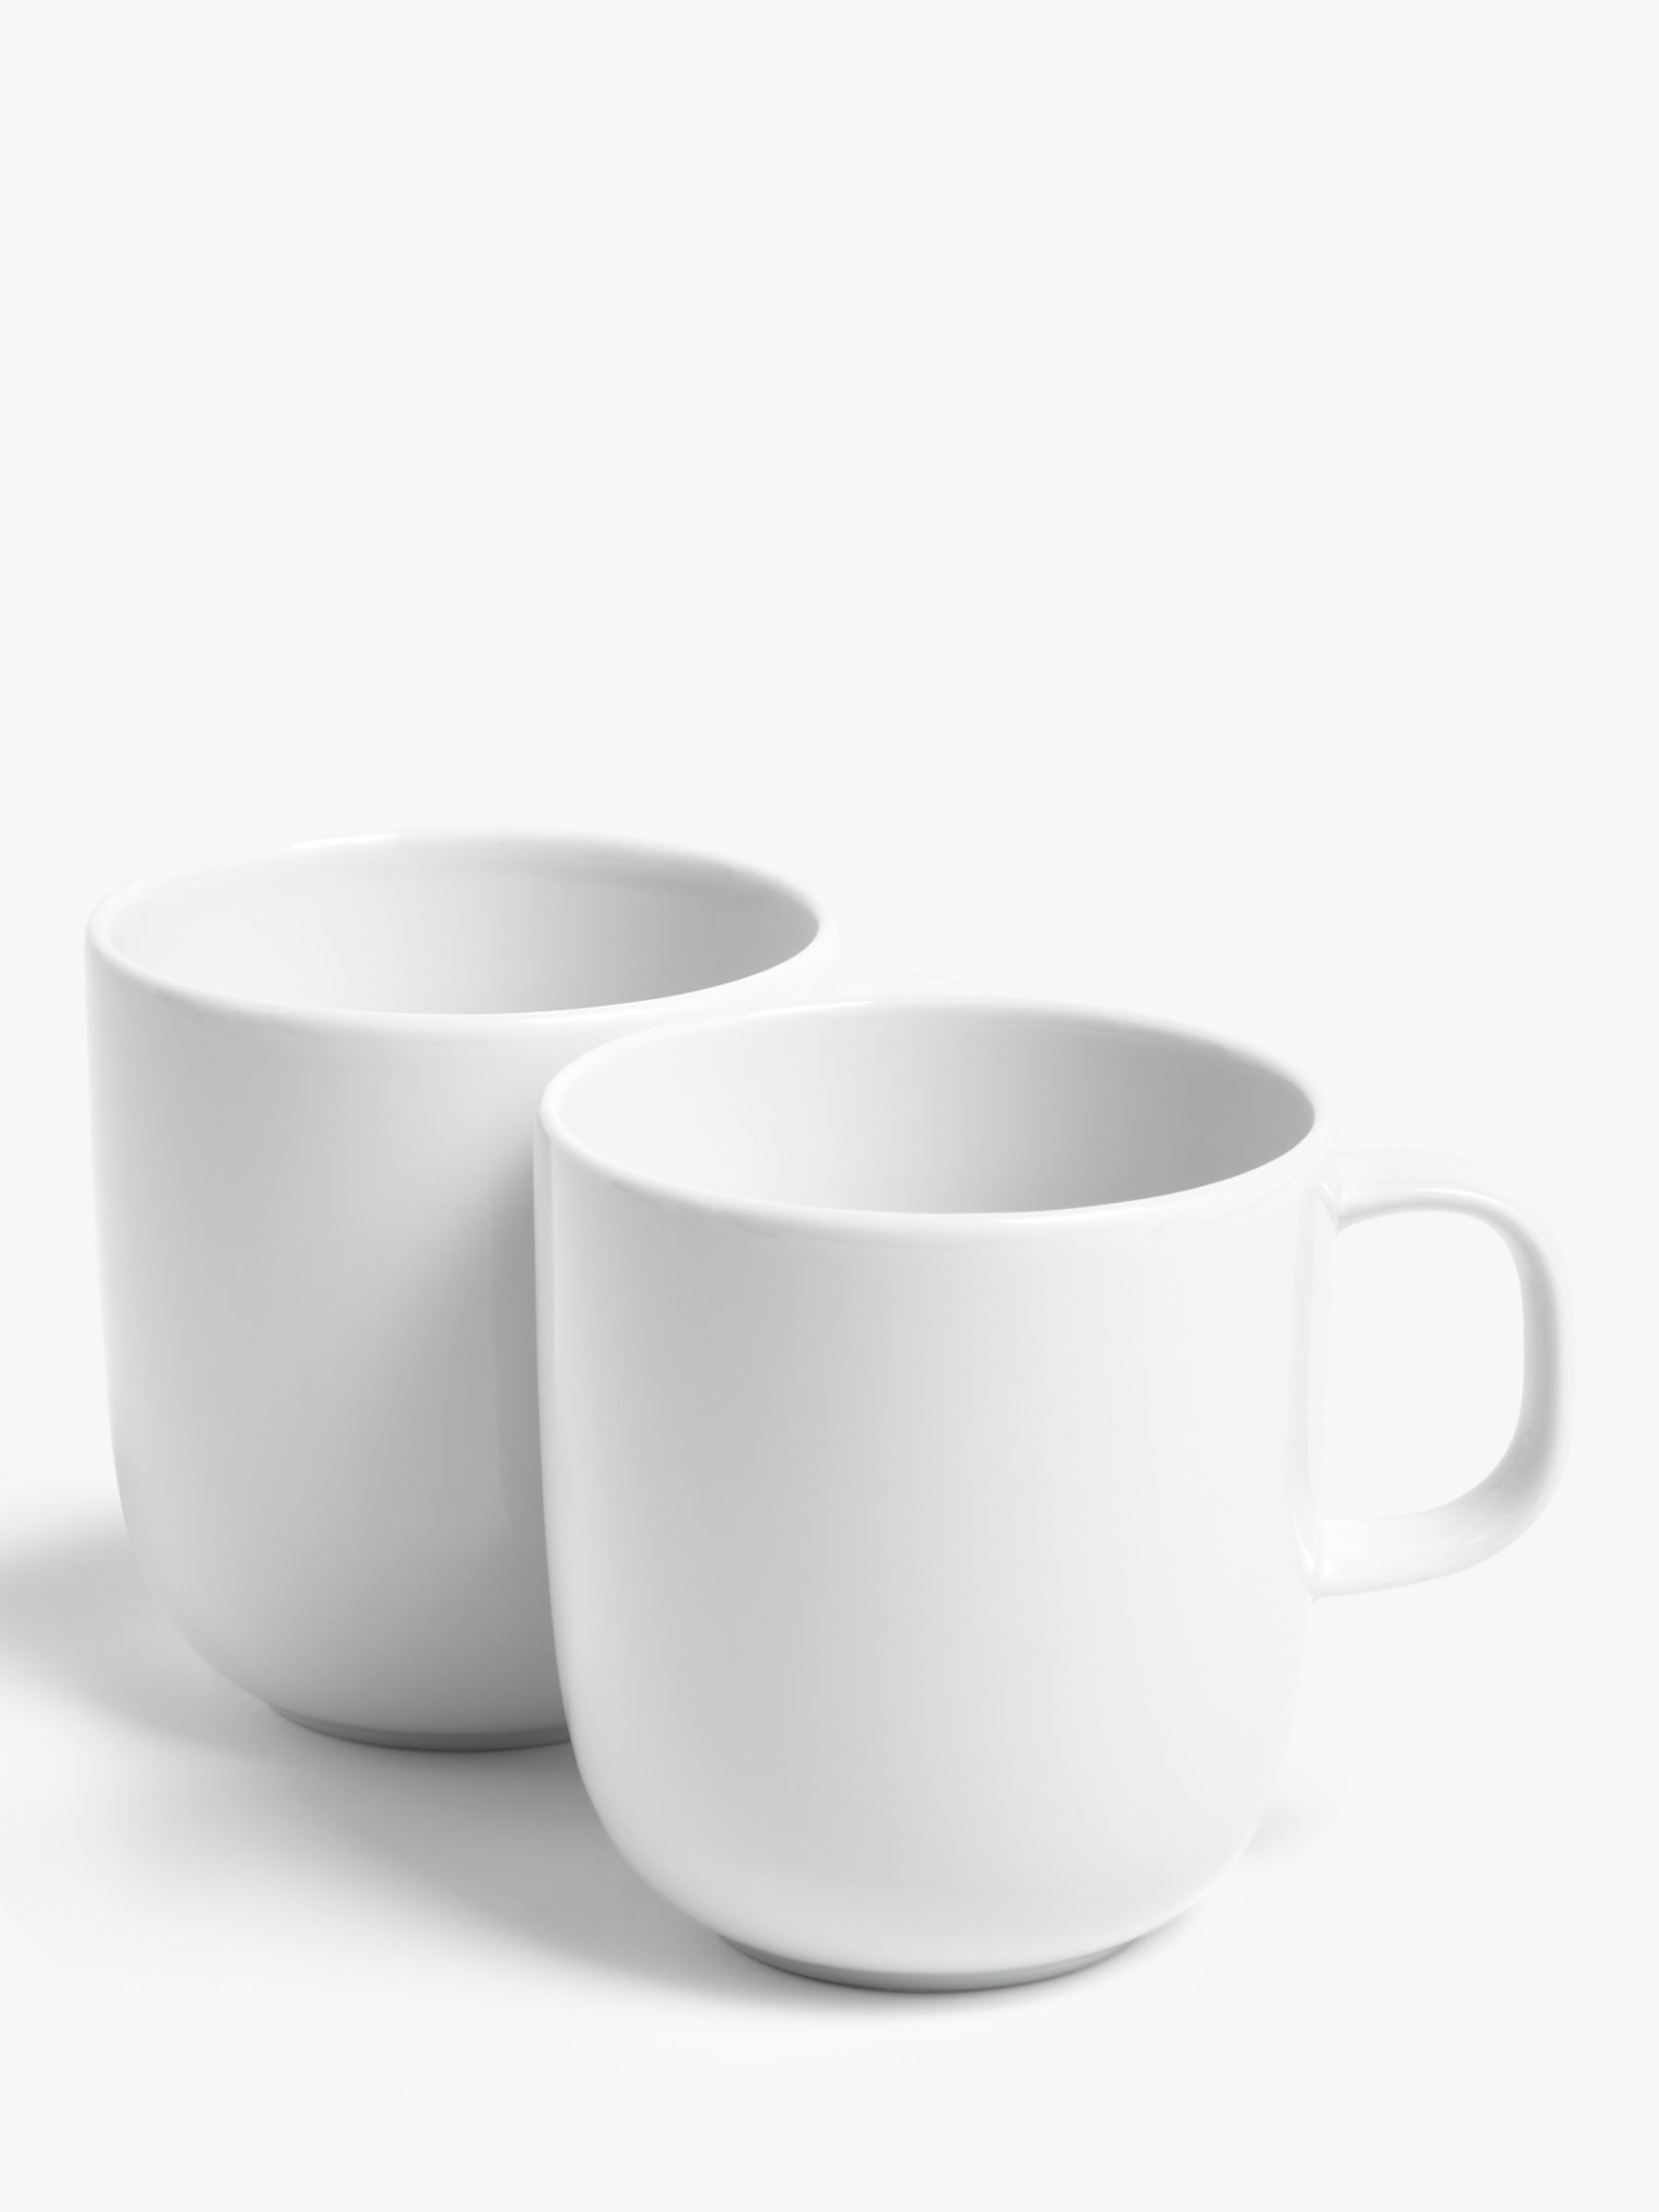 John Lewis ANYDAY Dine Large Mugs, Set of 2, White, 450ml